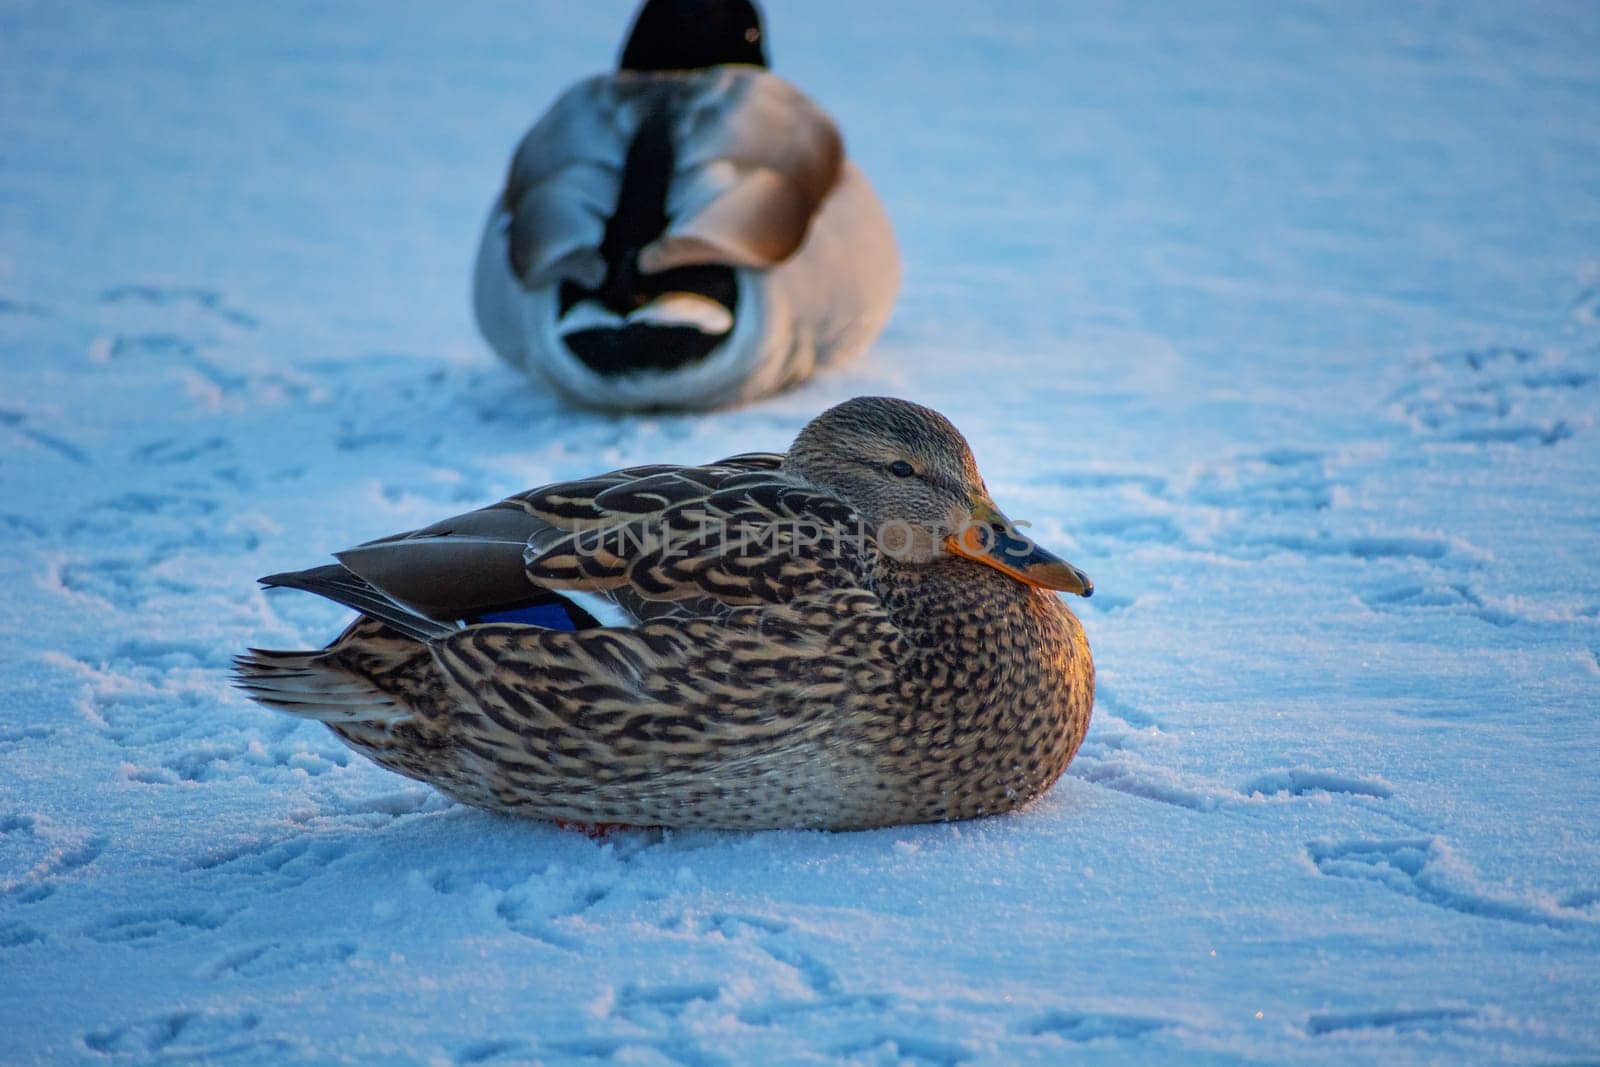 Mallard ducks sitting on the snow, winter evening, eastern Poland